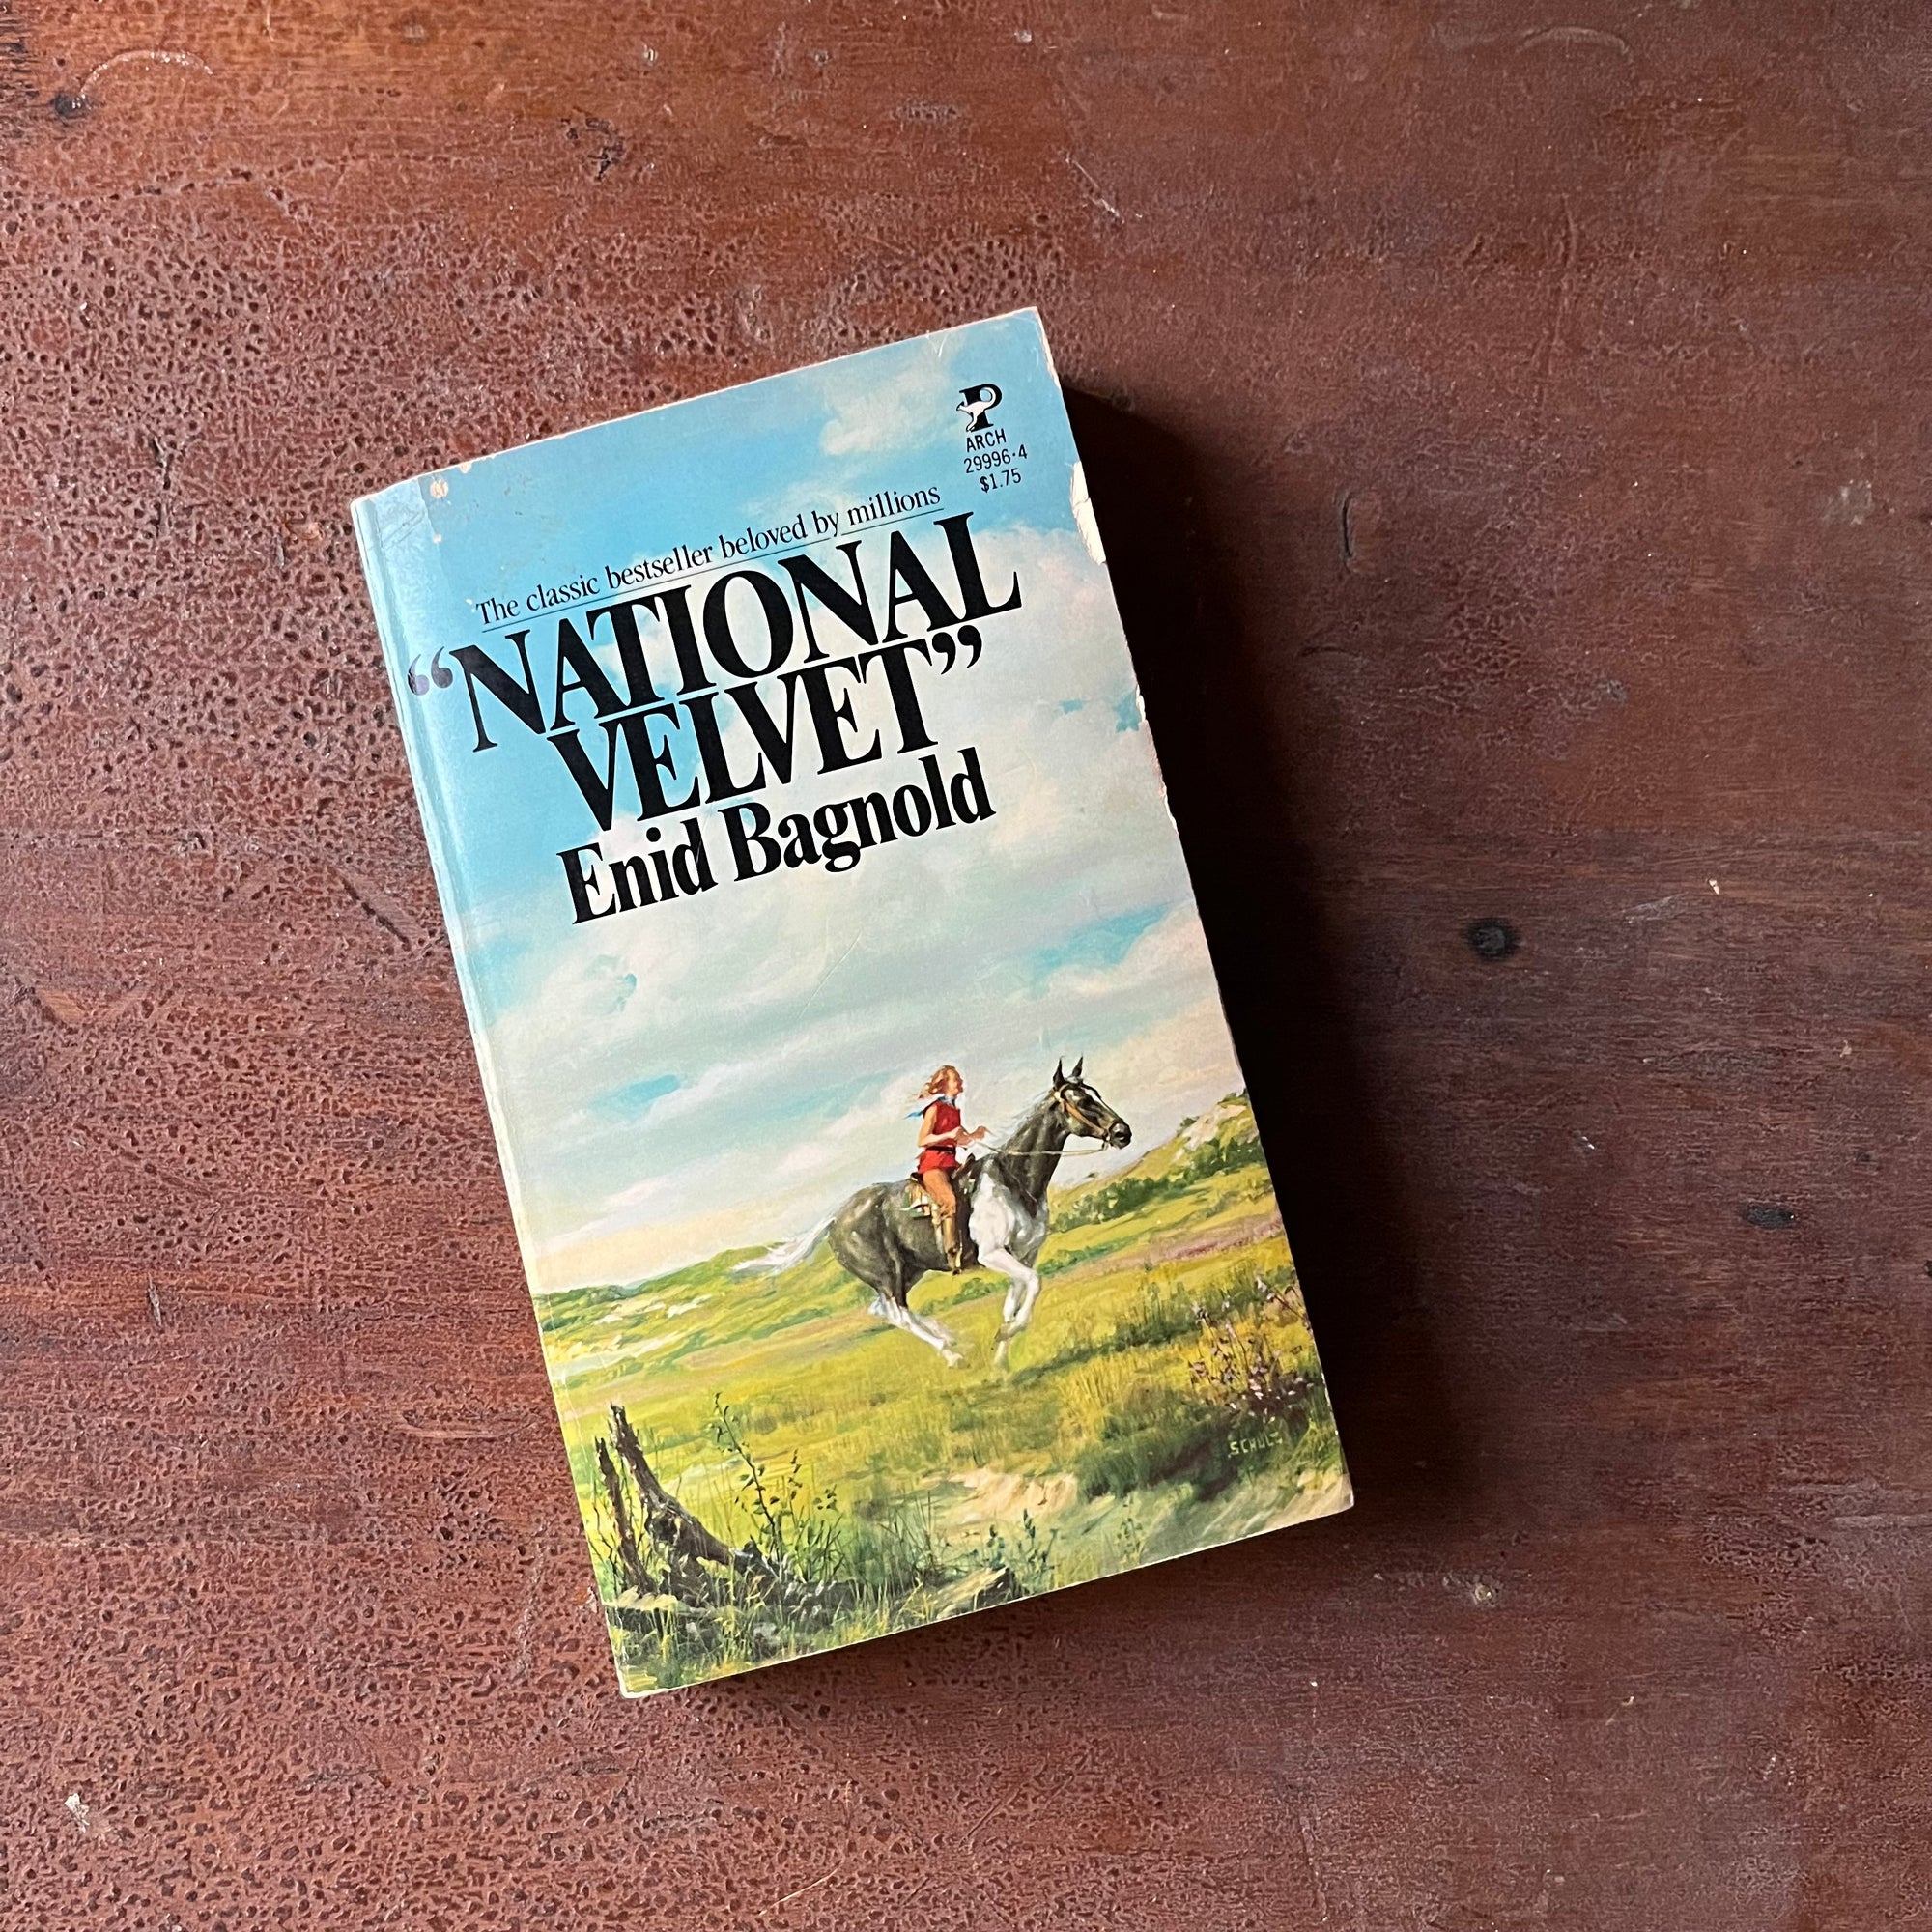 Log Cabin Vintage – vintage children’s book, children’s book, chapter book – National Velvet by Enid Bagnold - view of the front cover